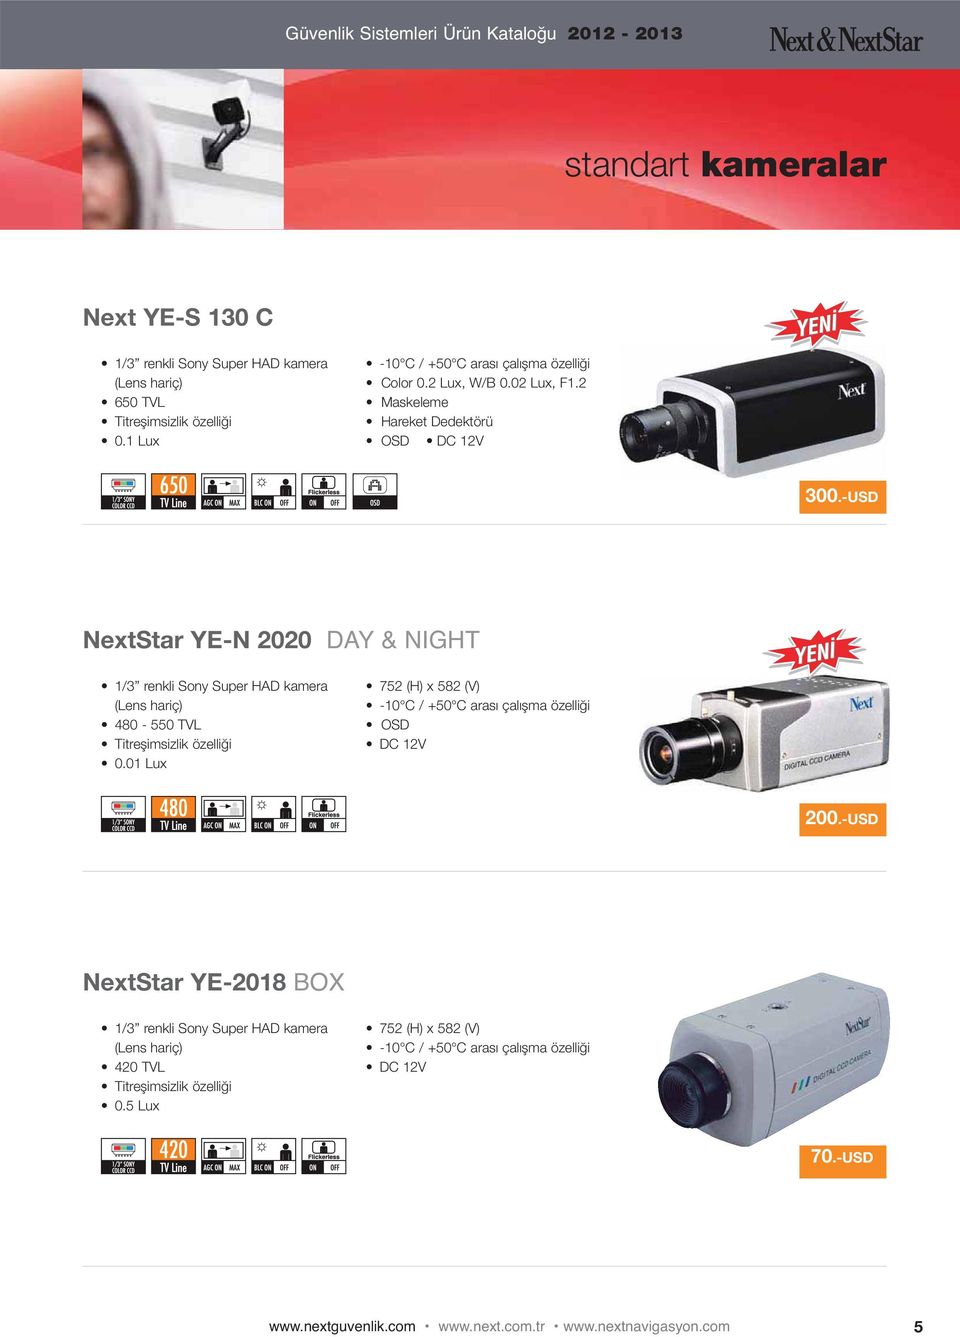 -USD NextStar YE-N 2020 DAY & NIGHT 1/3 renkli Sony Super HAD kamera (Lens hariç) 480-550 TVL Titreşimsizlik özelliği 0.